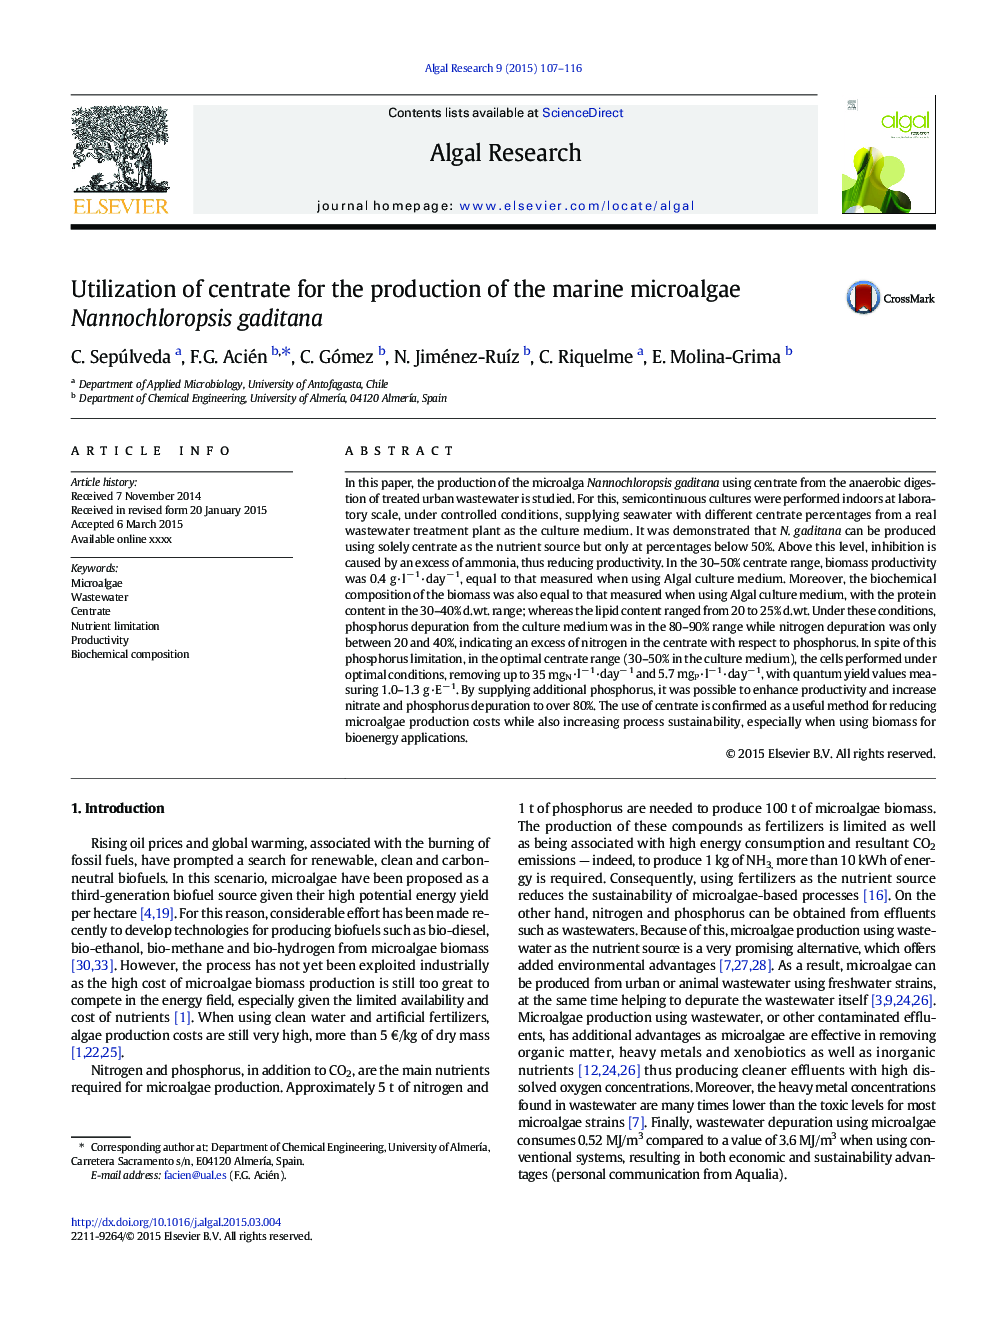 Utilization of centrate for the production of the marine microalgae Nannochloropsis gaditana